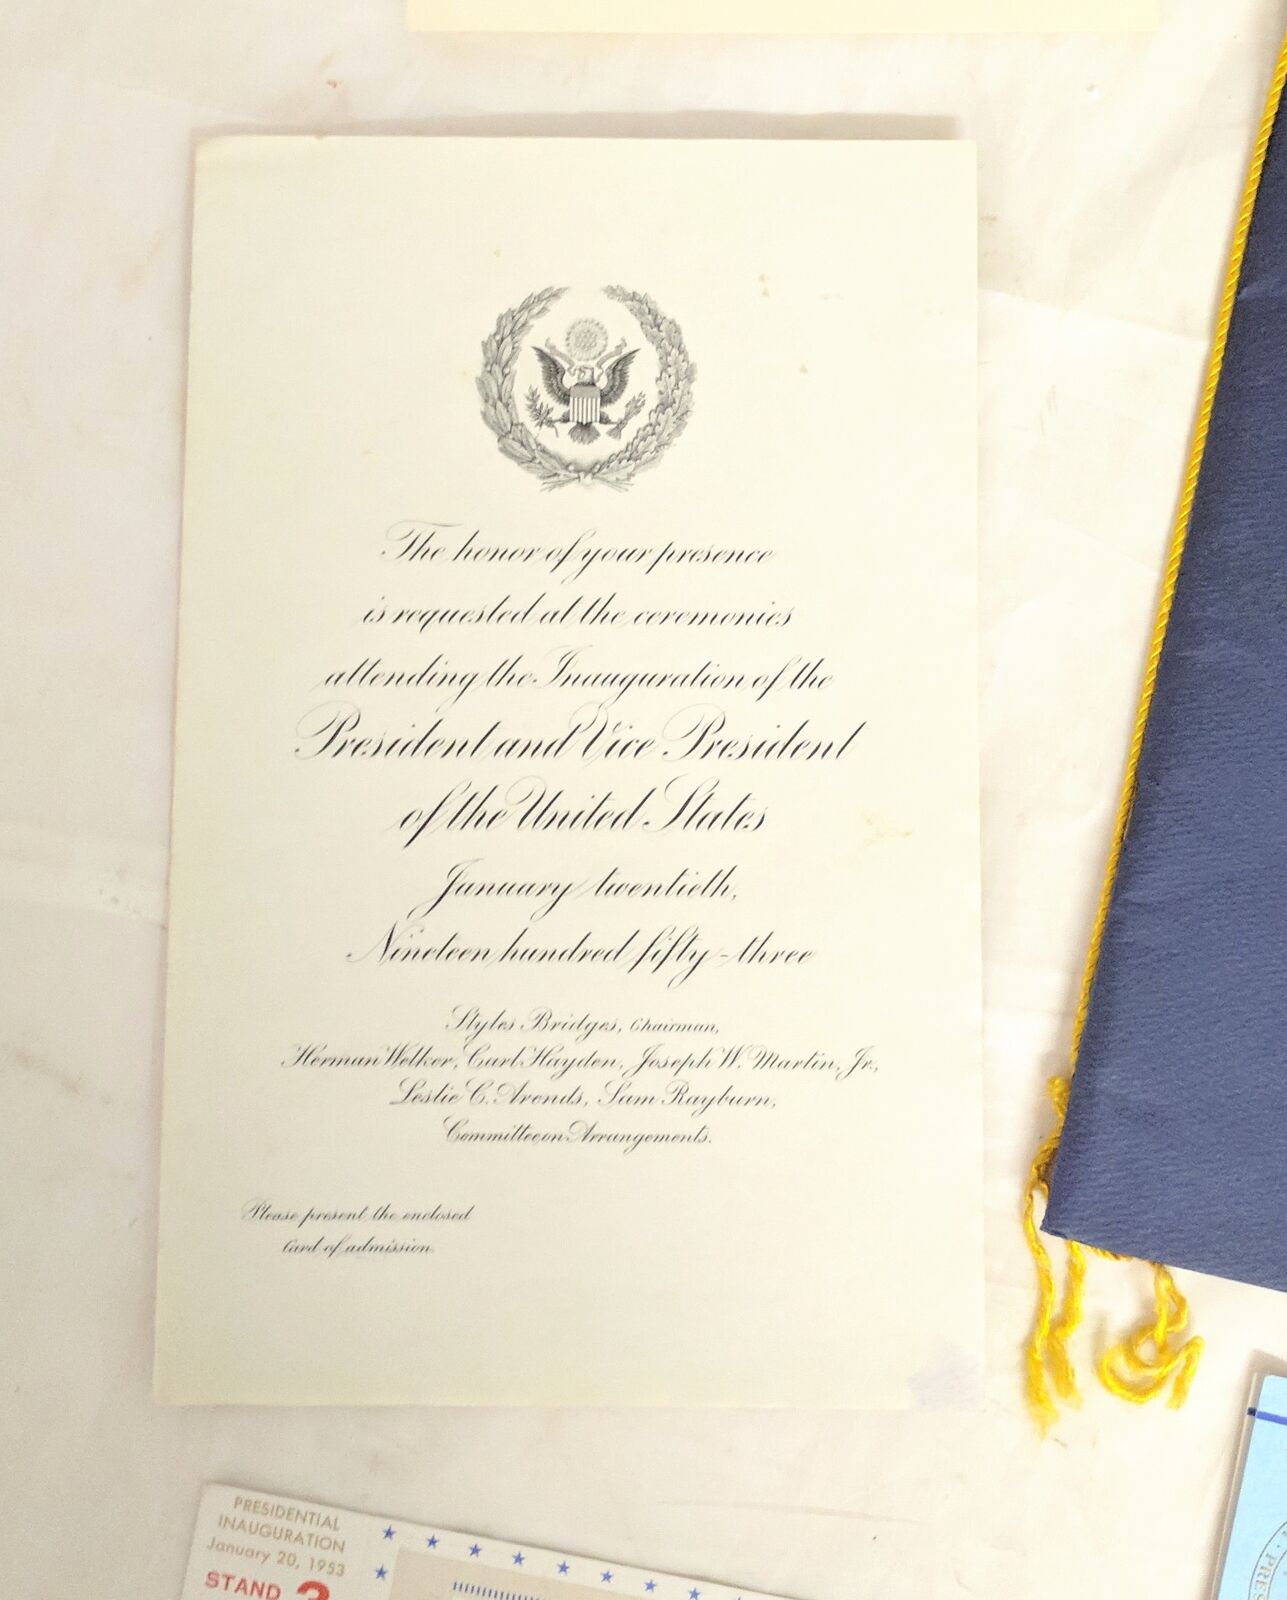 1953 Presidential Inauguration Invitation and Ceremonies Program & Ticket,Sealed 